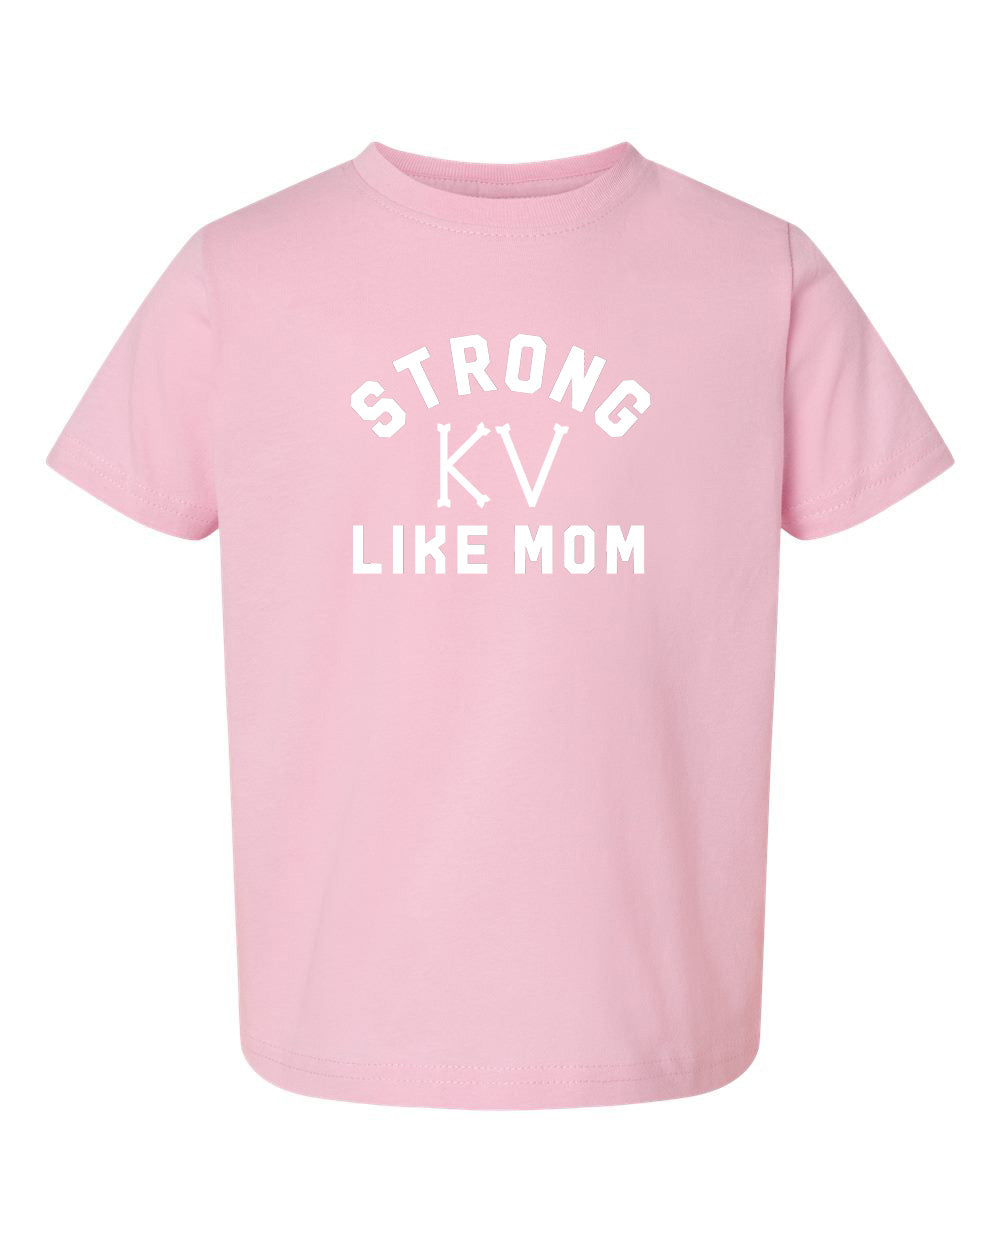 Strong Like Dad/Mom Kids Shirt